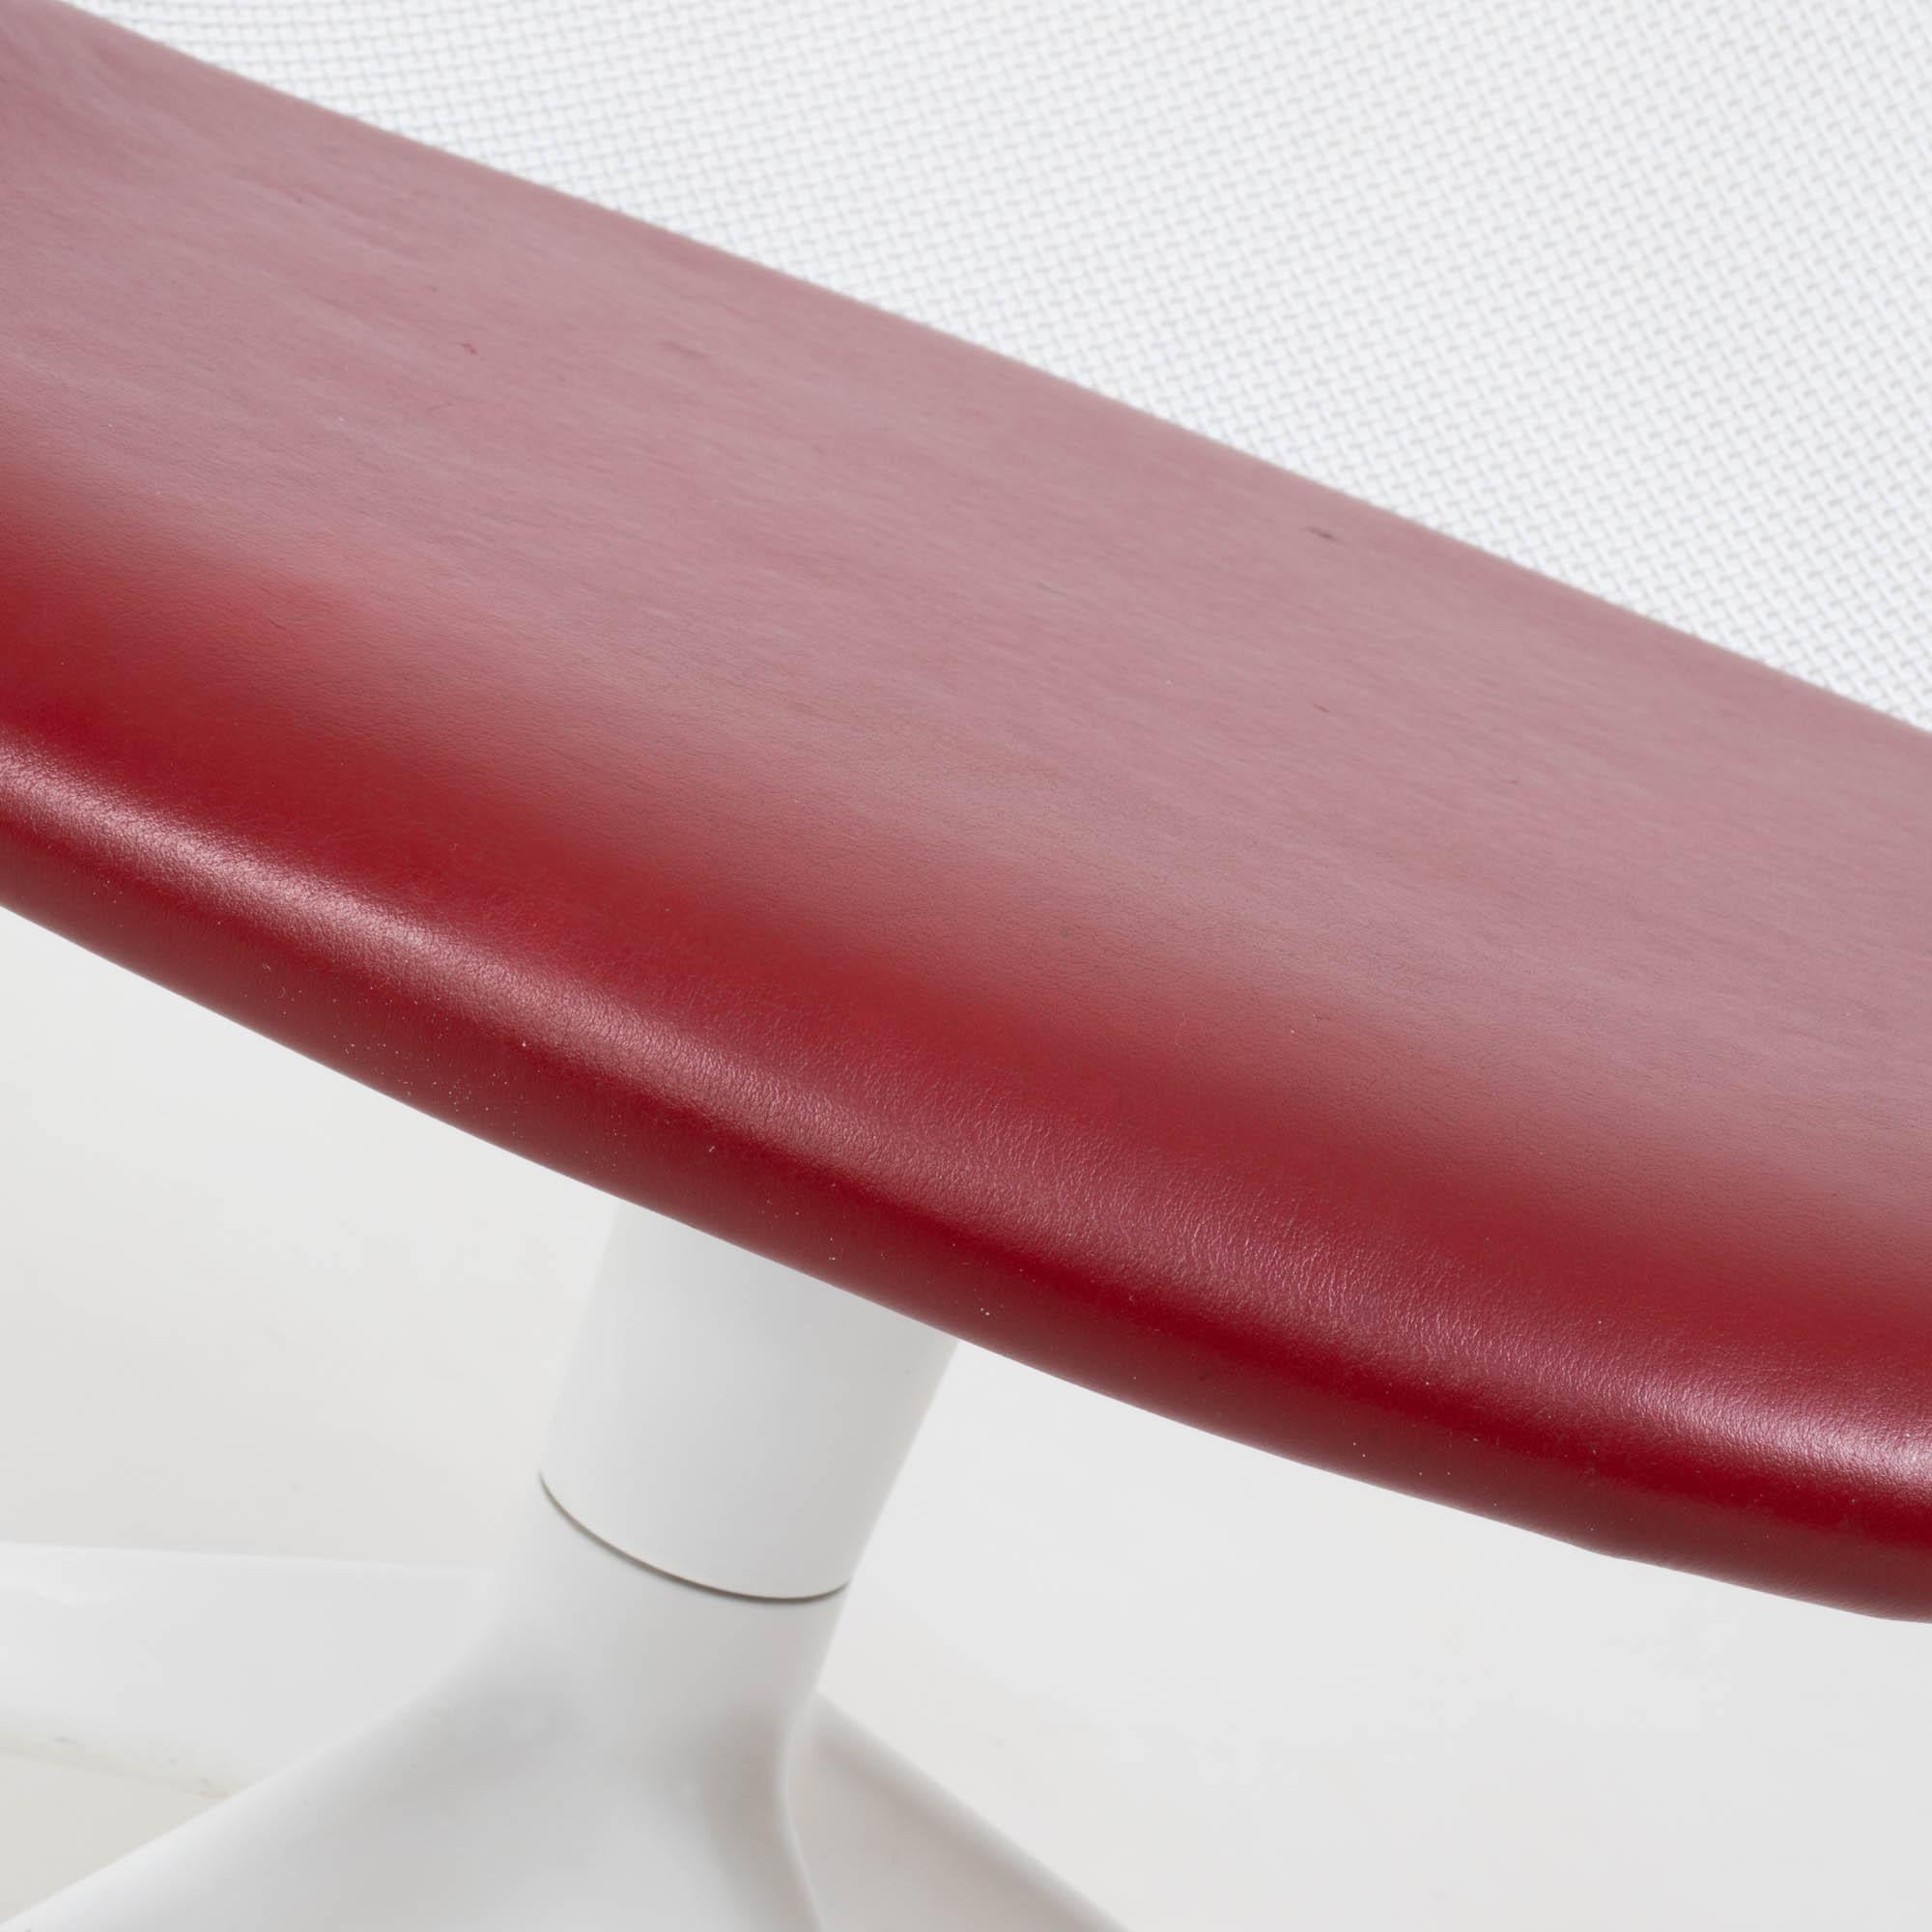 B&B Italia by Antonio Citterio Luta White & Red Leather Swivel Chairs, Set of 6 3